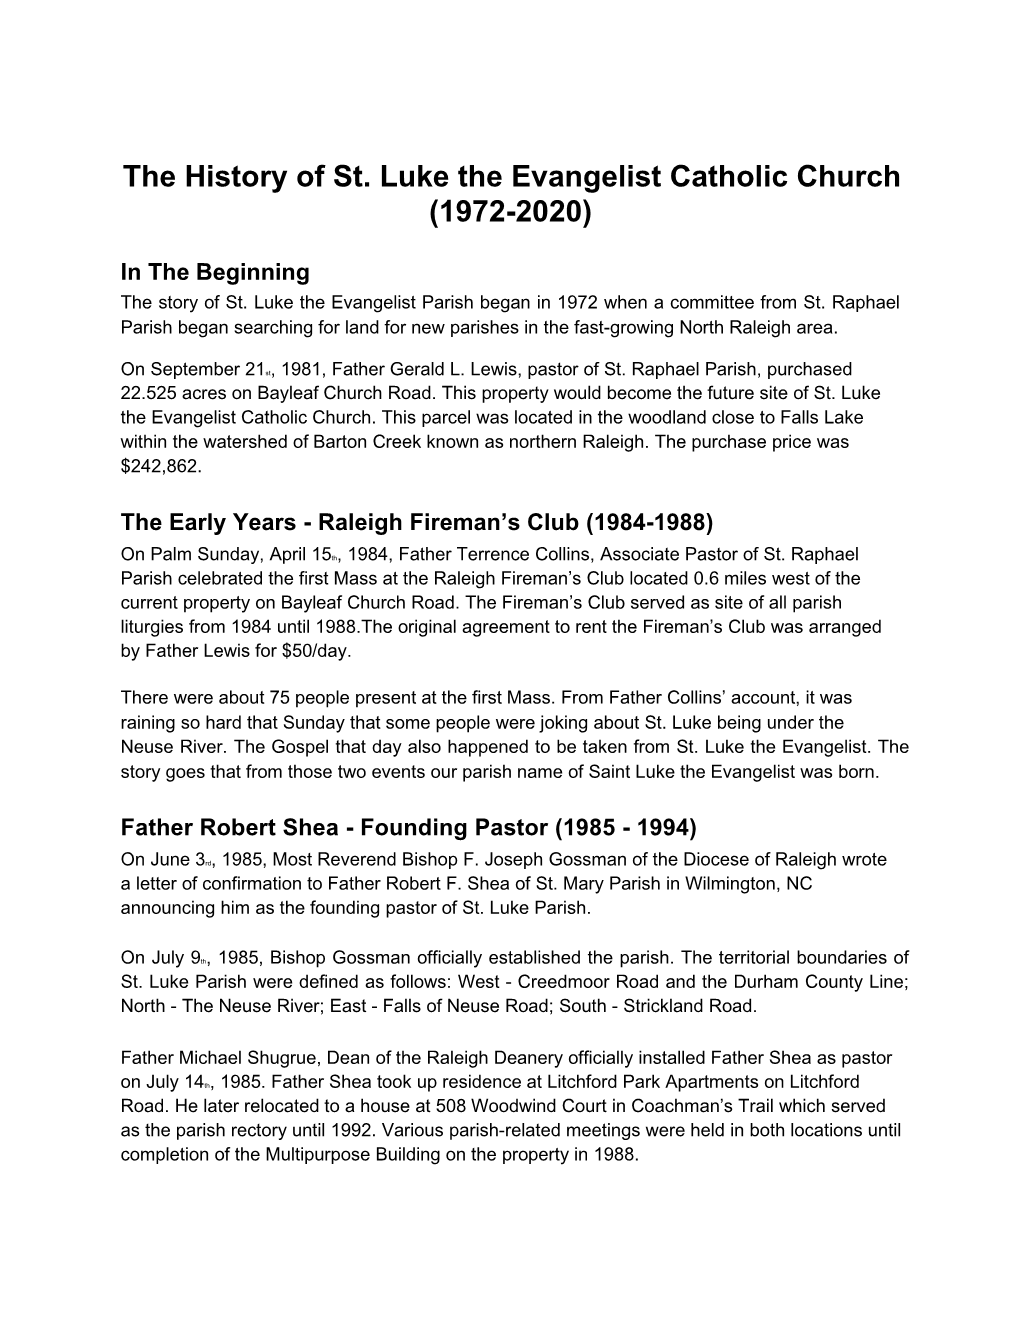 The History of St. Luke the Evangelist Catholic Church (1972-2020)